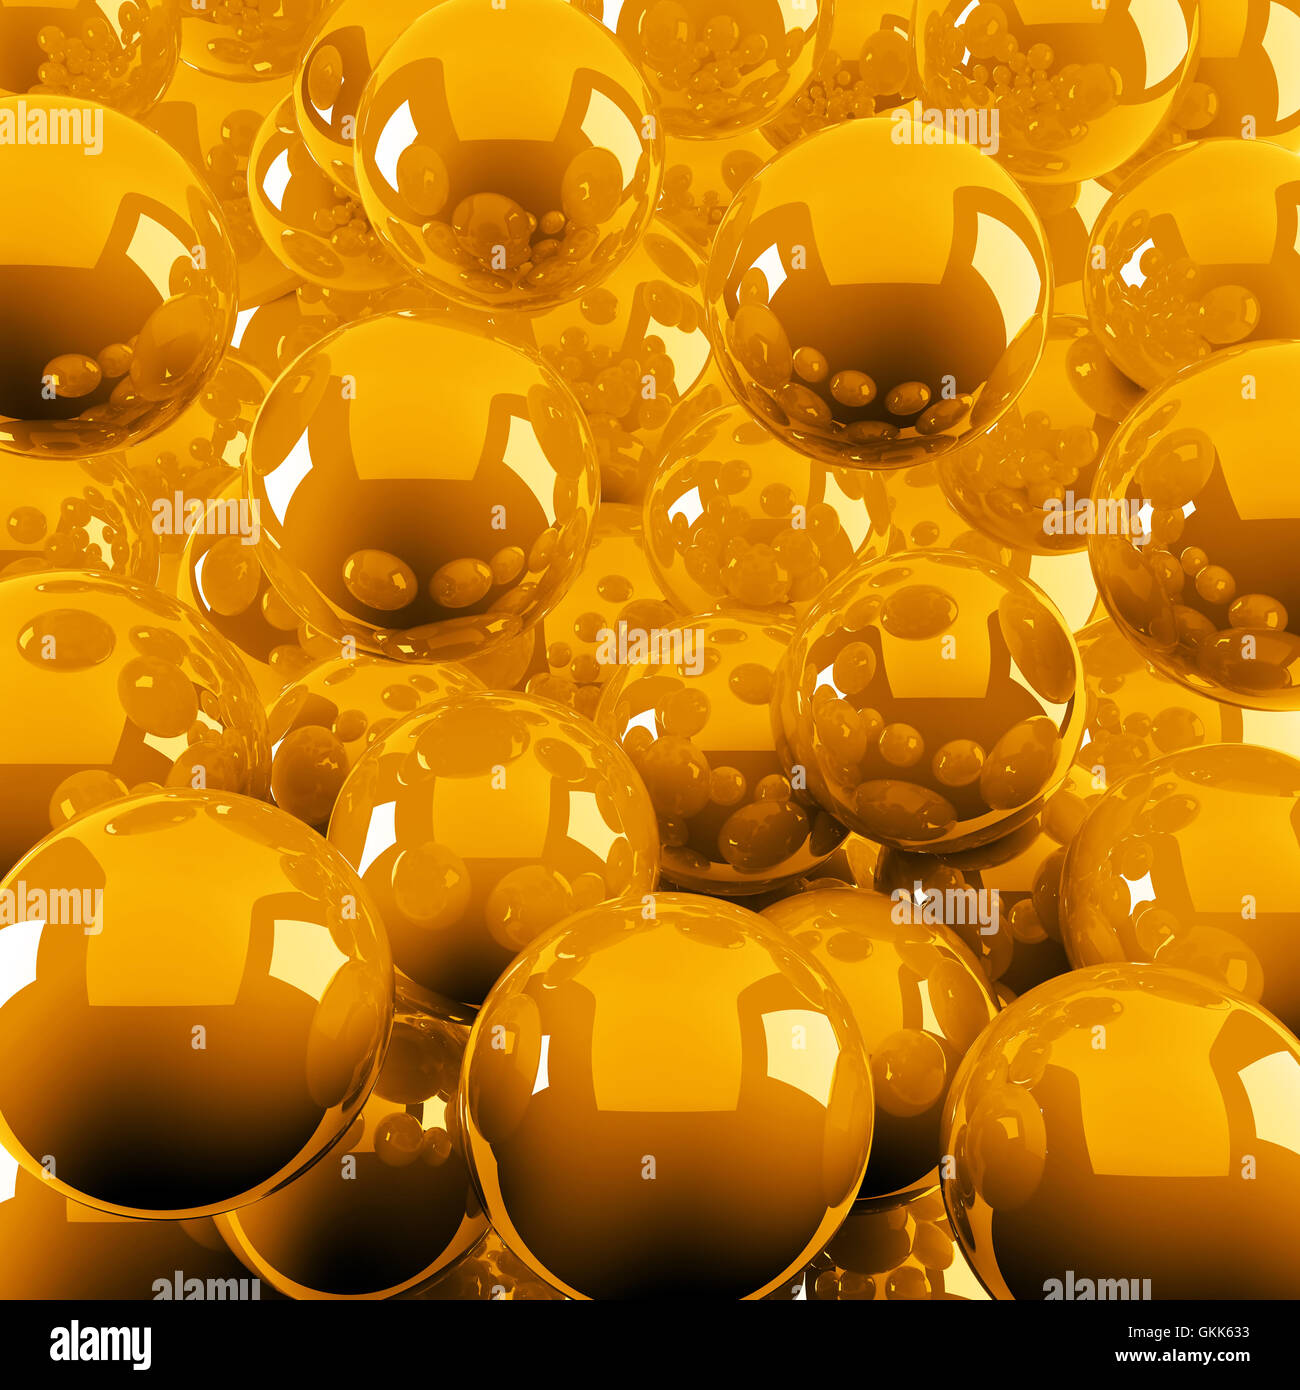 abstract background from bright orange shiny balls Stock Photo